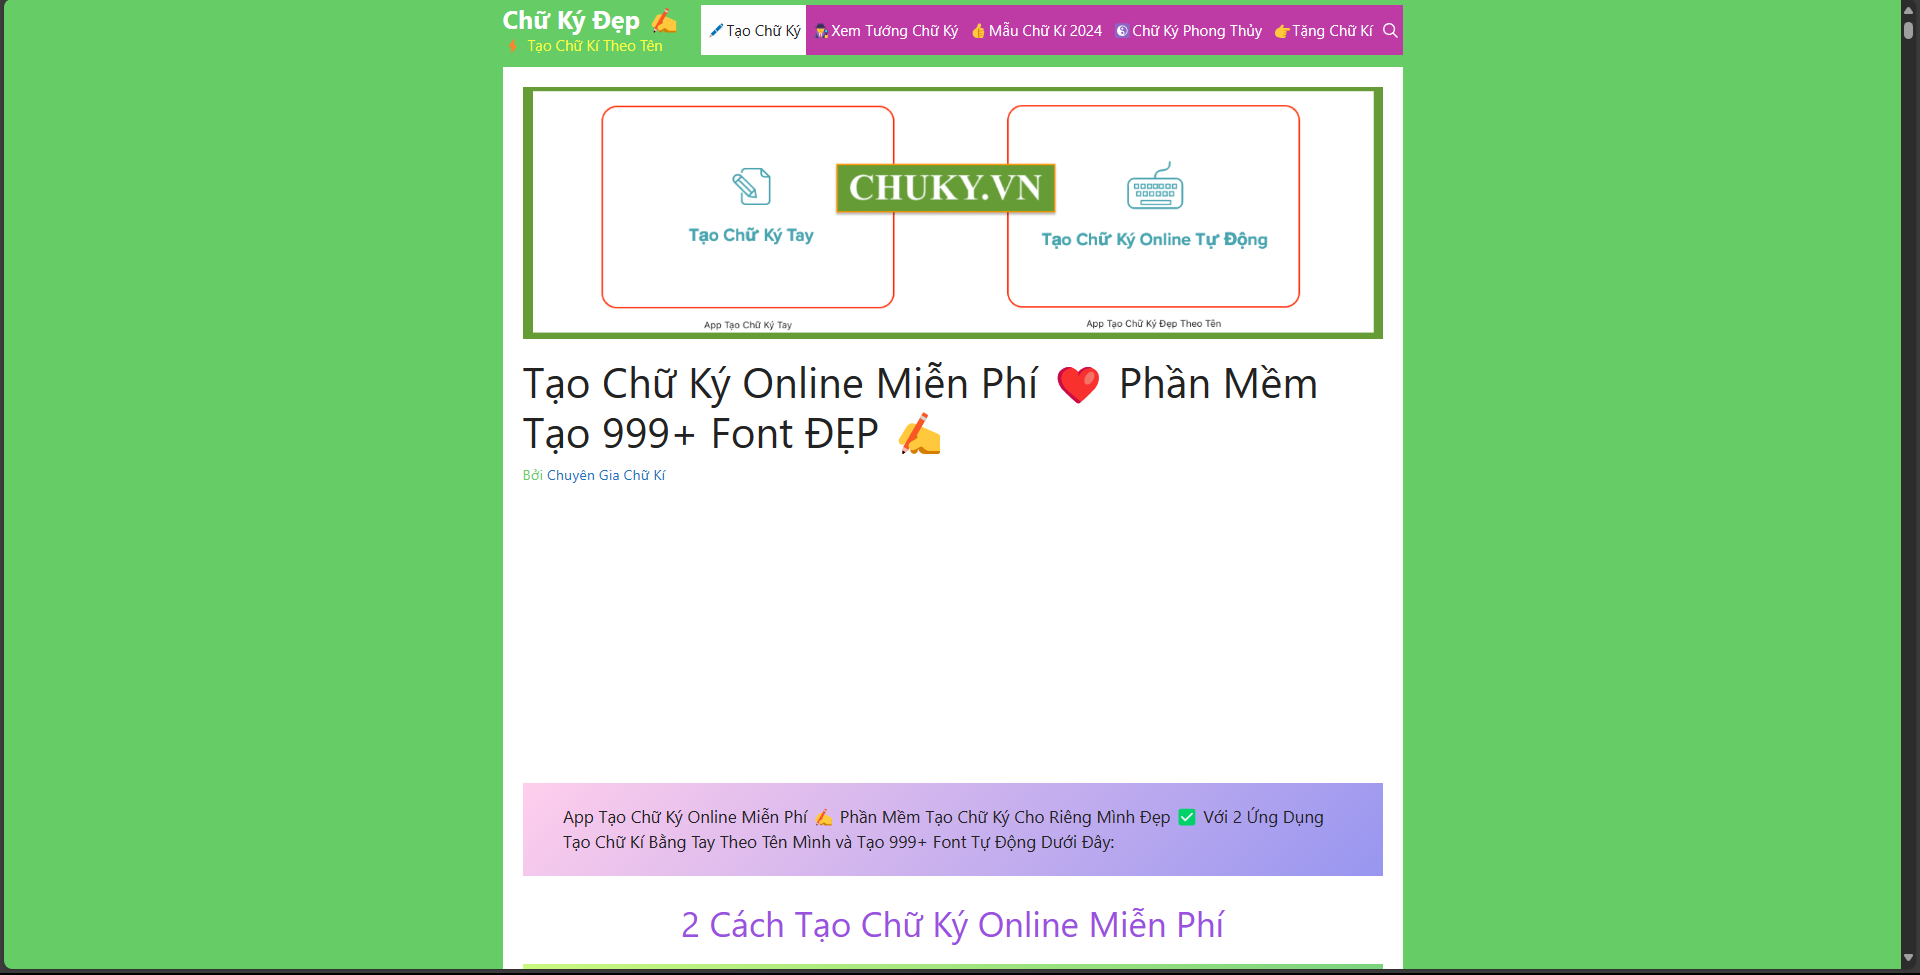 Website Chuky.vn